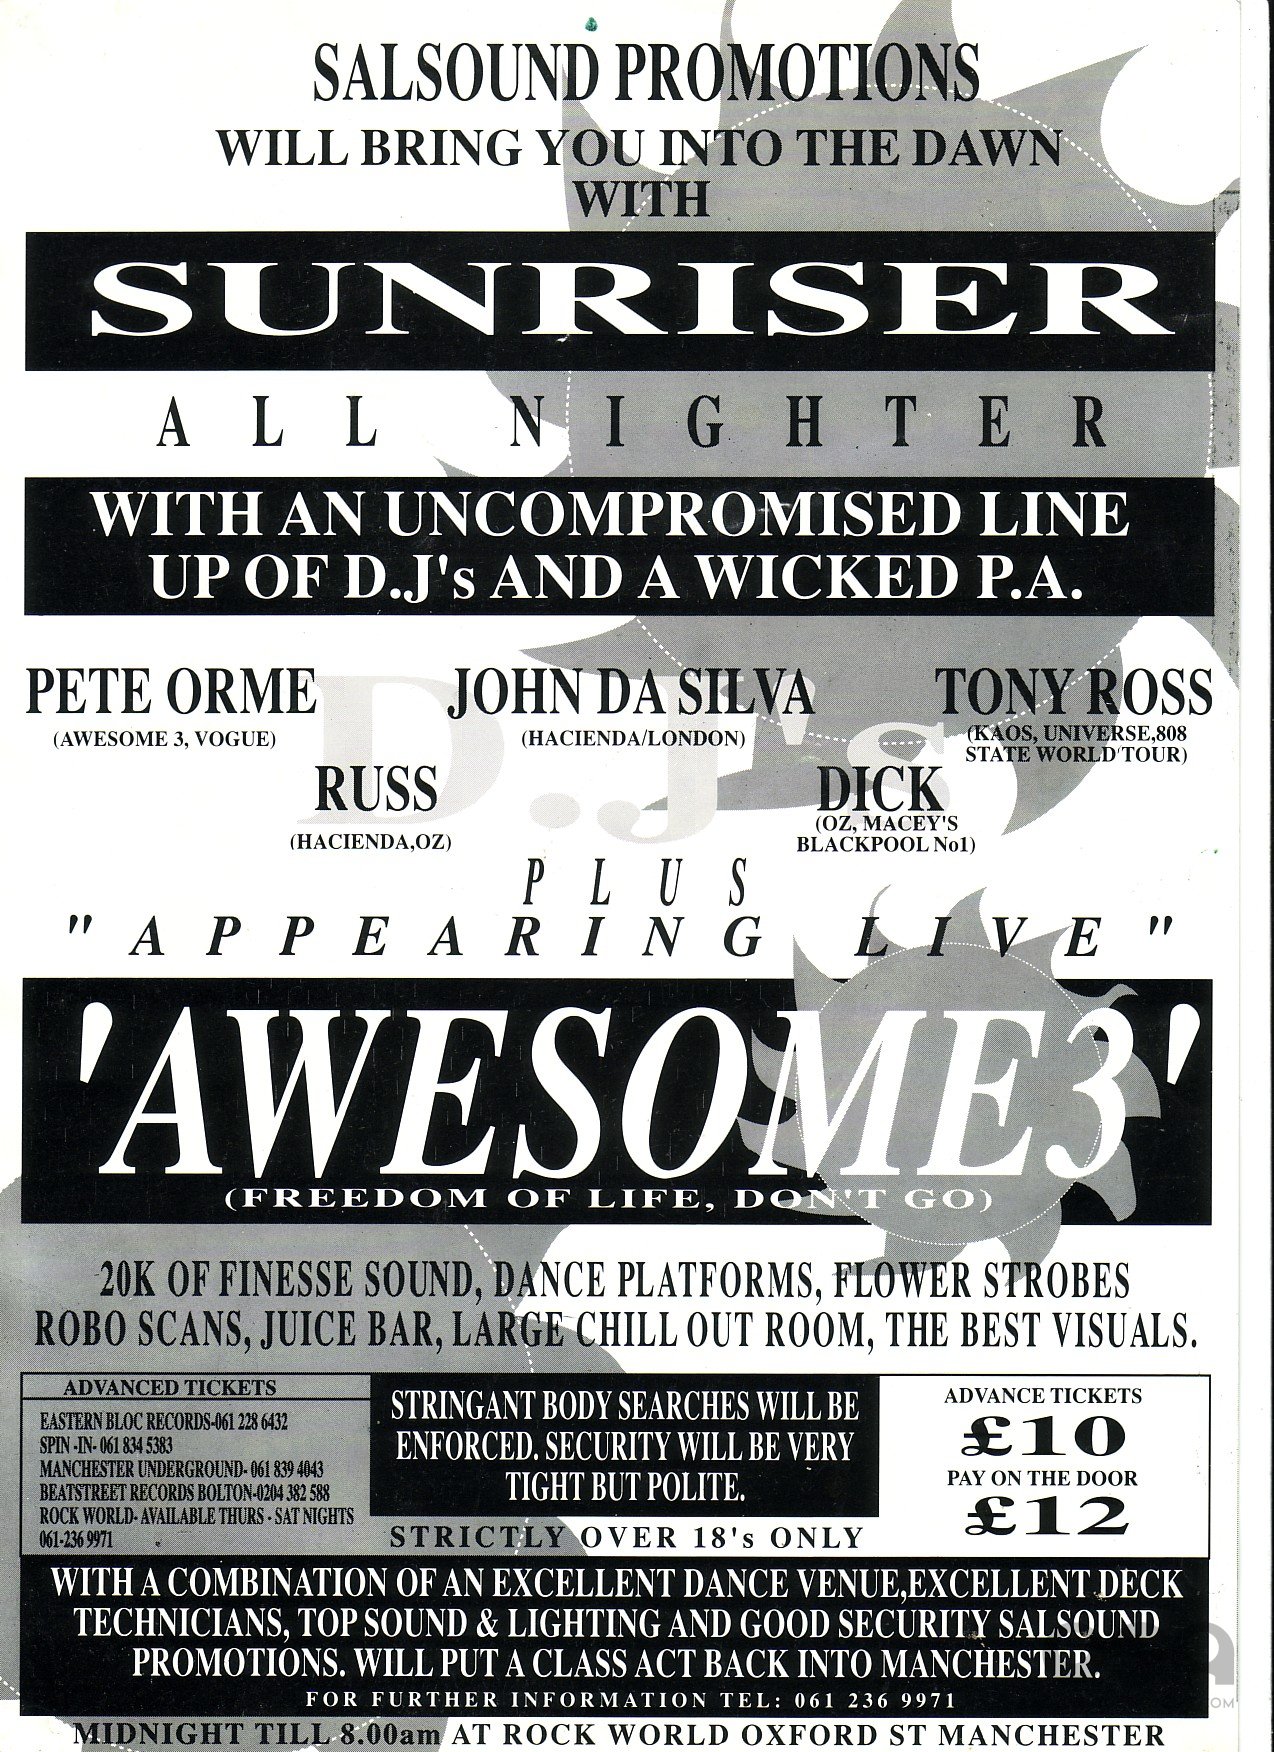 1_Rockworld_Sunriser_Manchester_Sun_30th_Aug_1992_rear_view.jpg